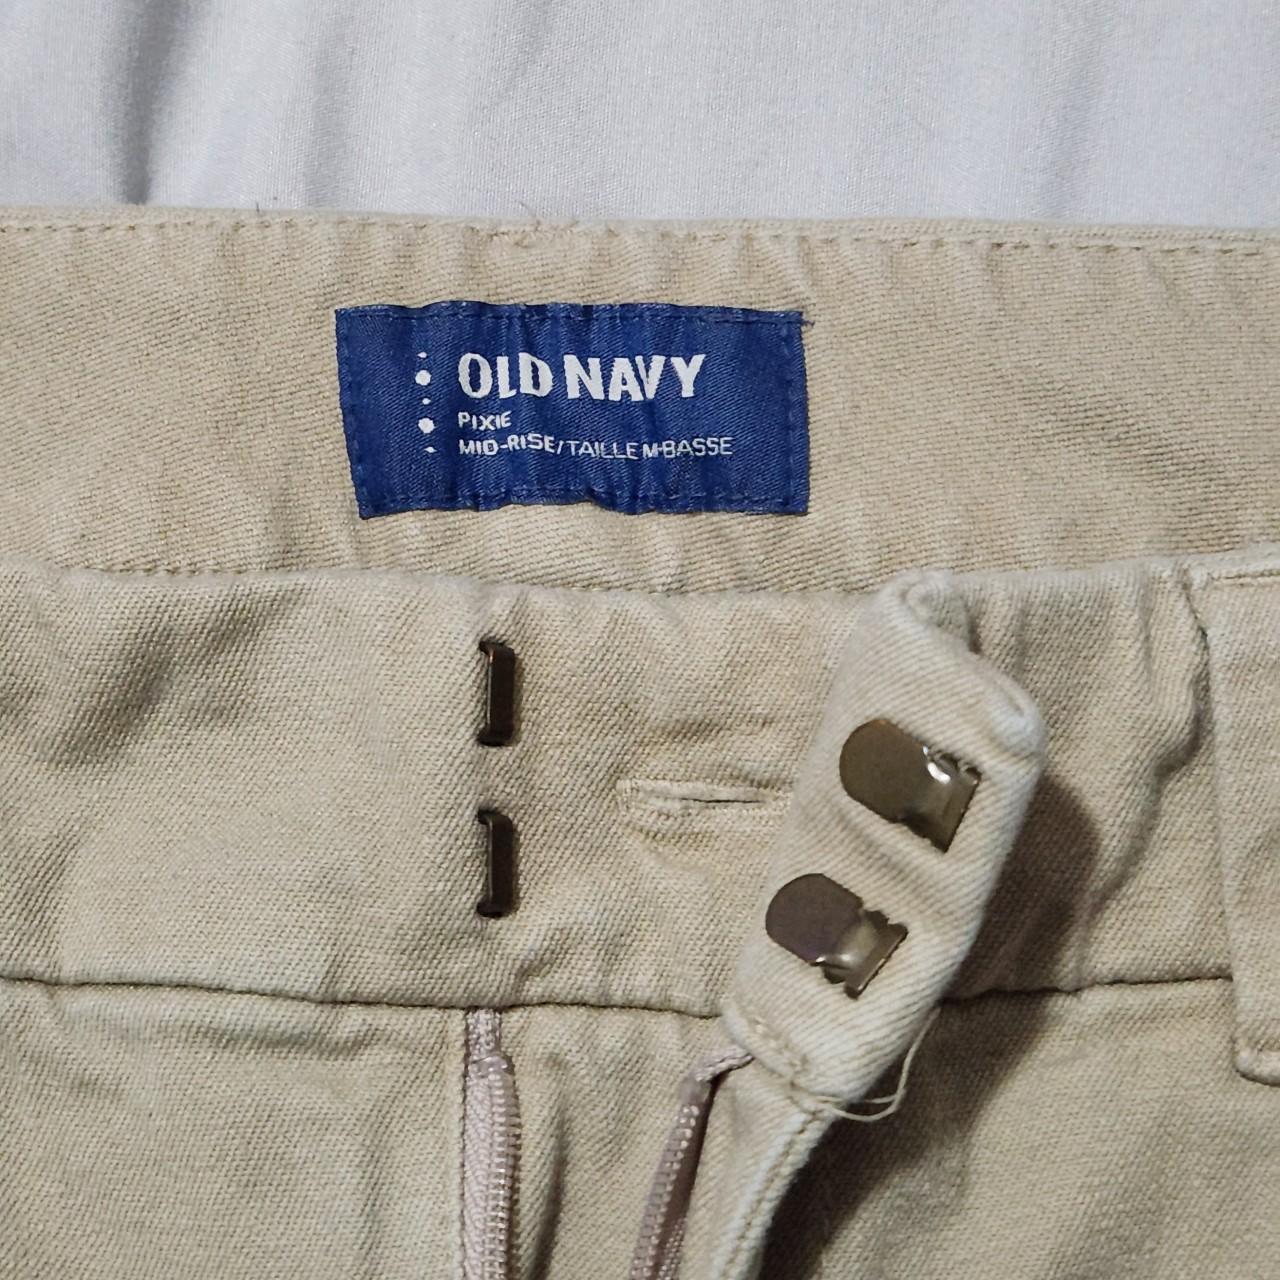 Old Navy Mid-Rise Pixie Pants Size 2 Regular - Depop